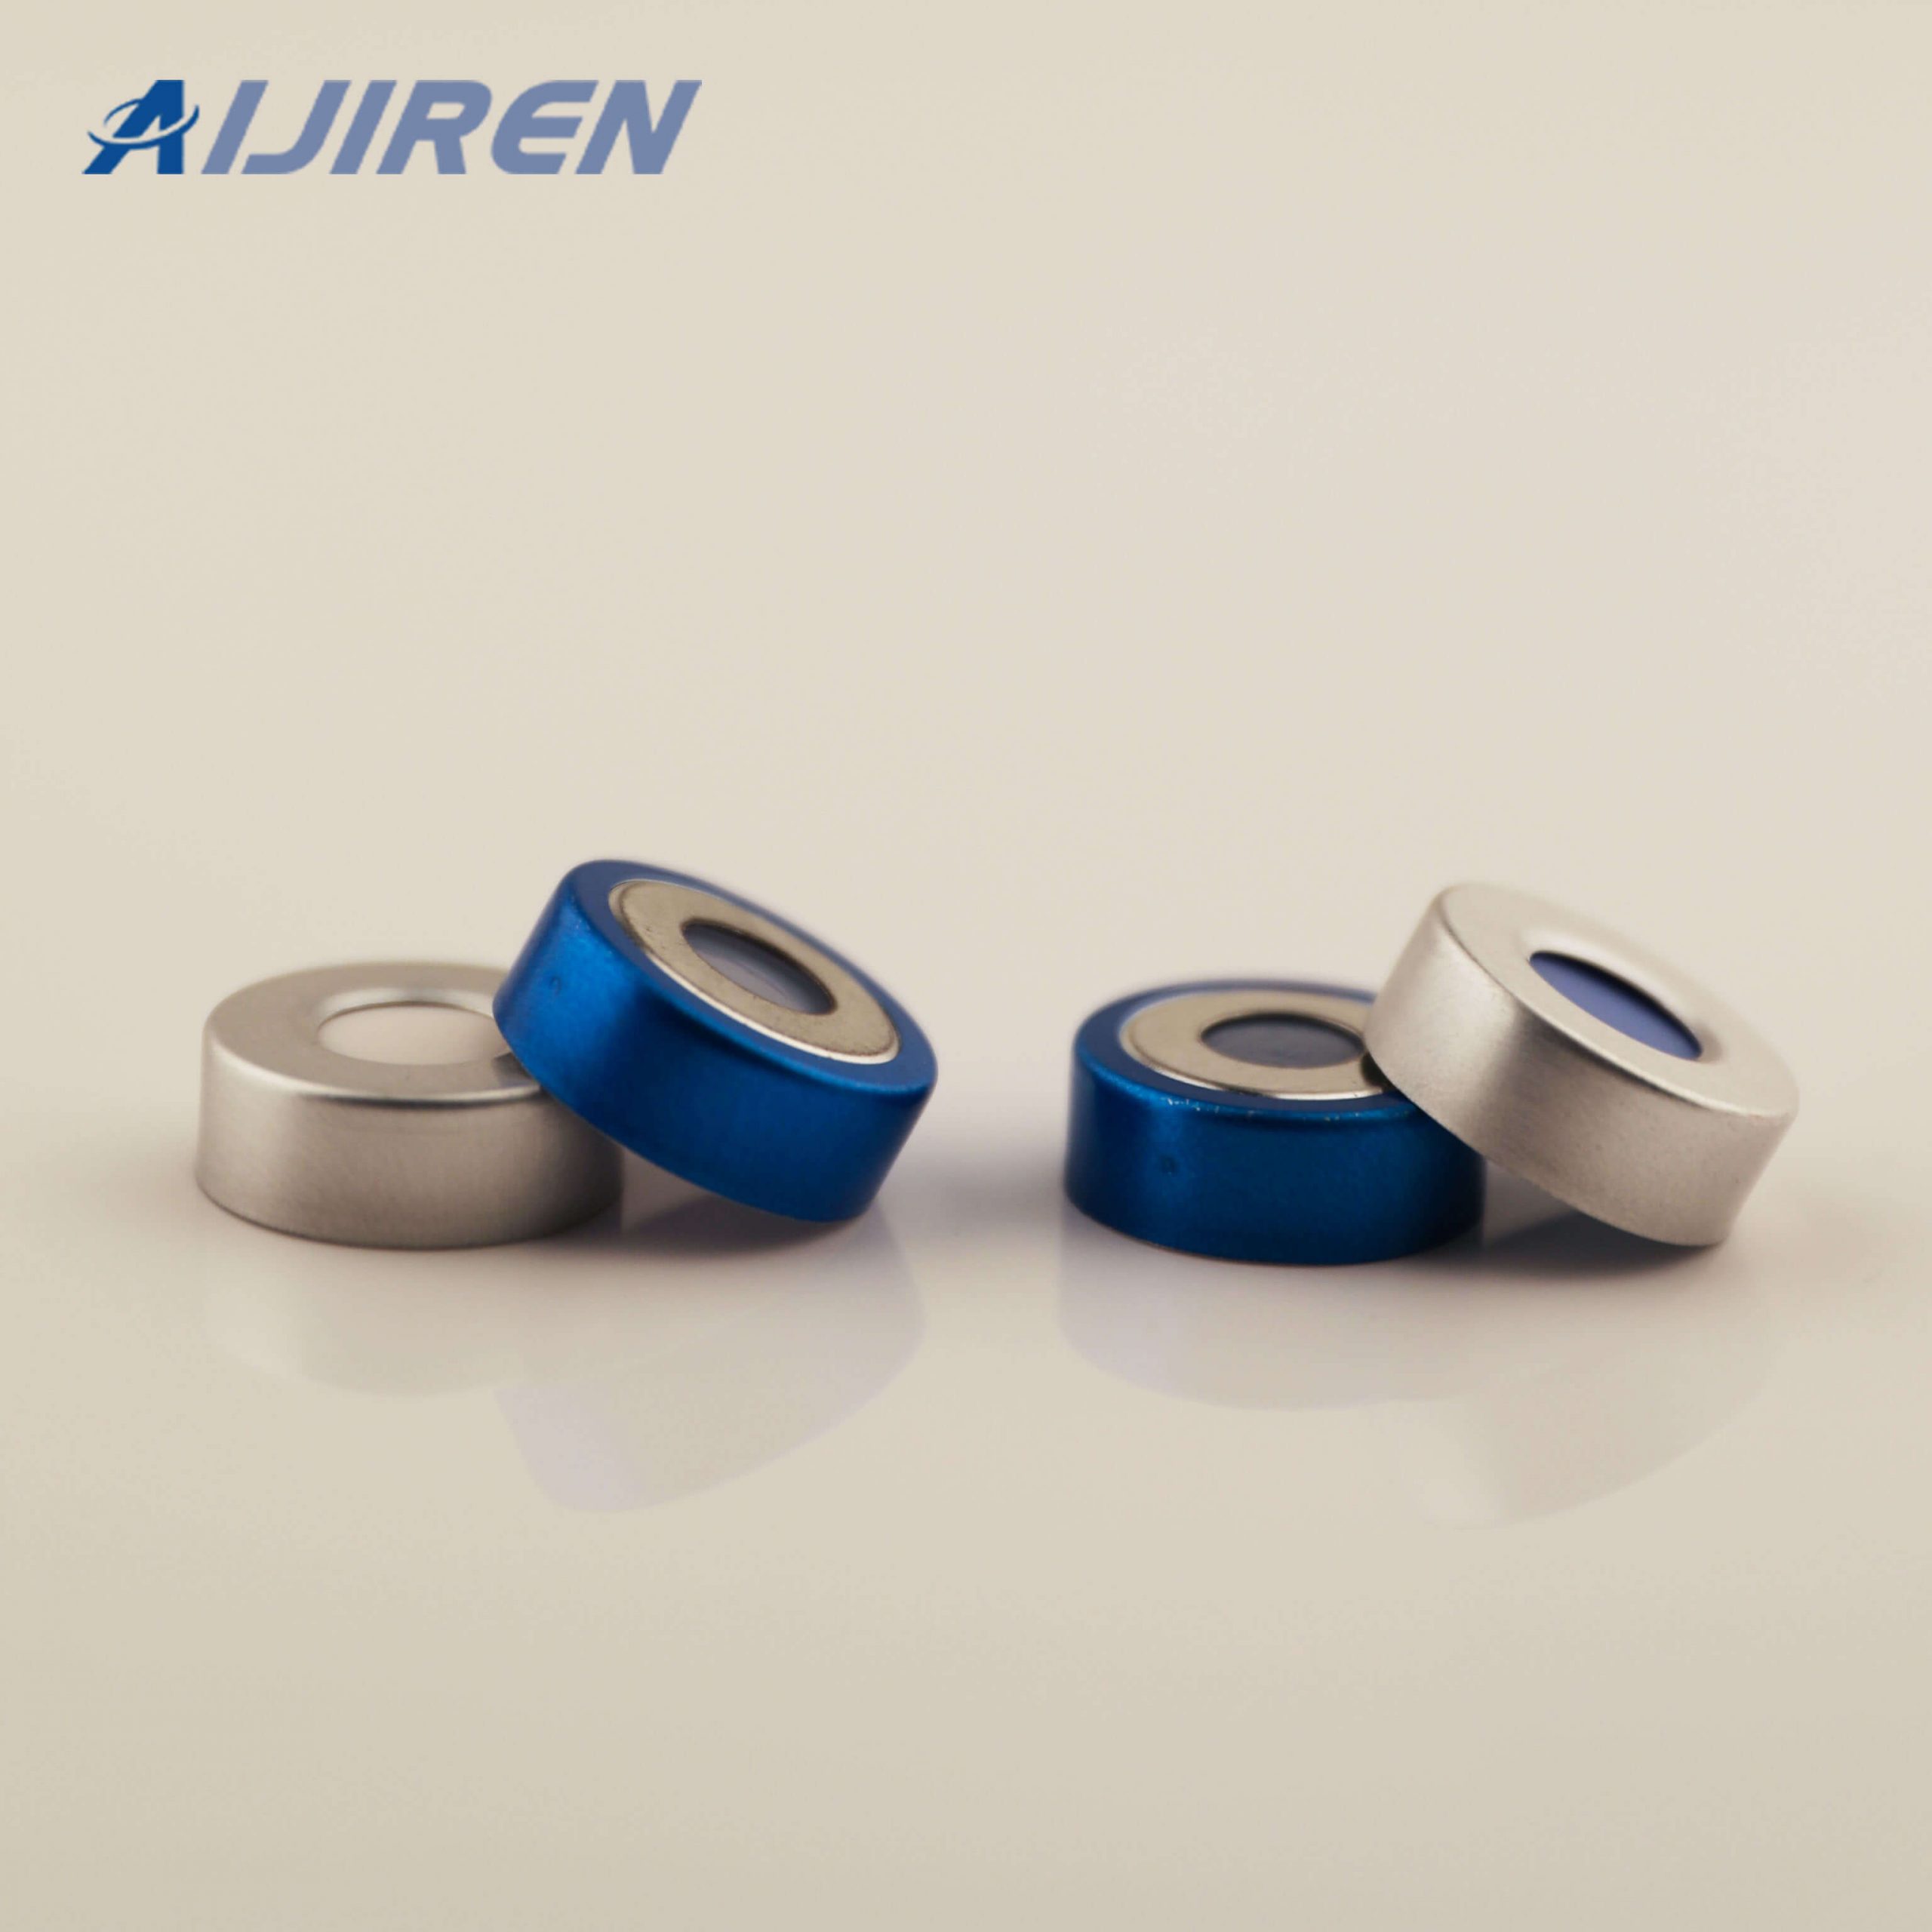 Aijiren Aluminum Crimp Caps for GC Vials